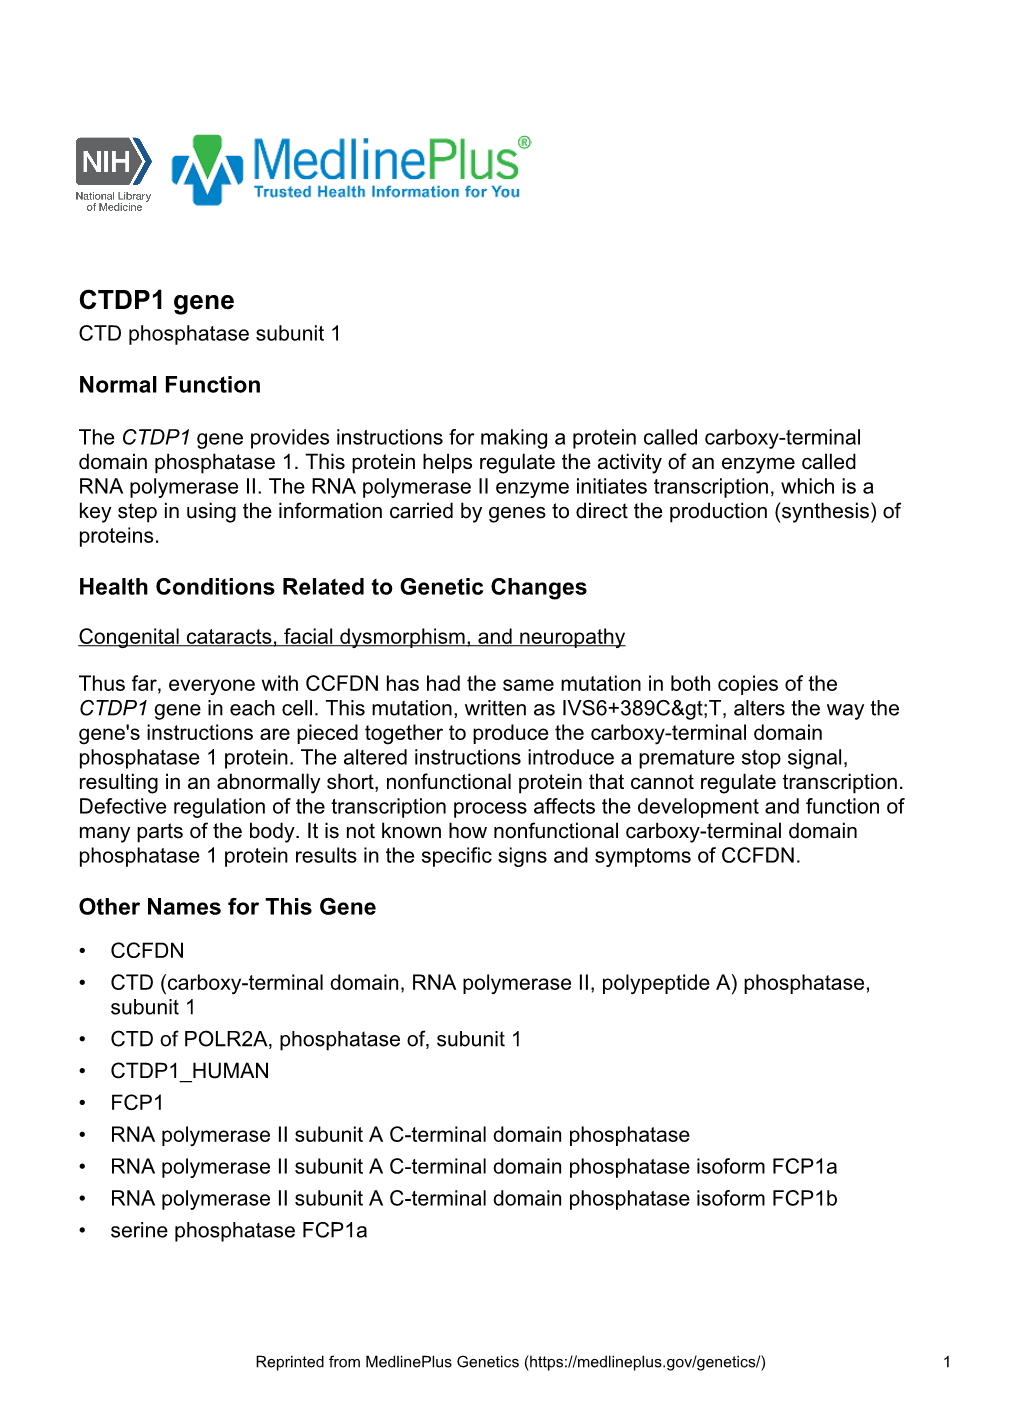 CTDP1 Gene CTD Phosphatase Subunit 1